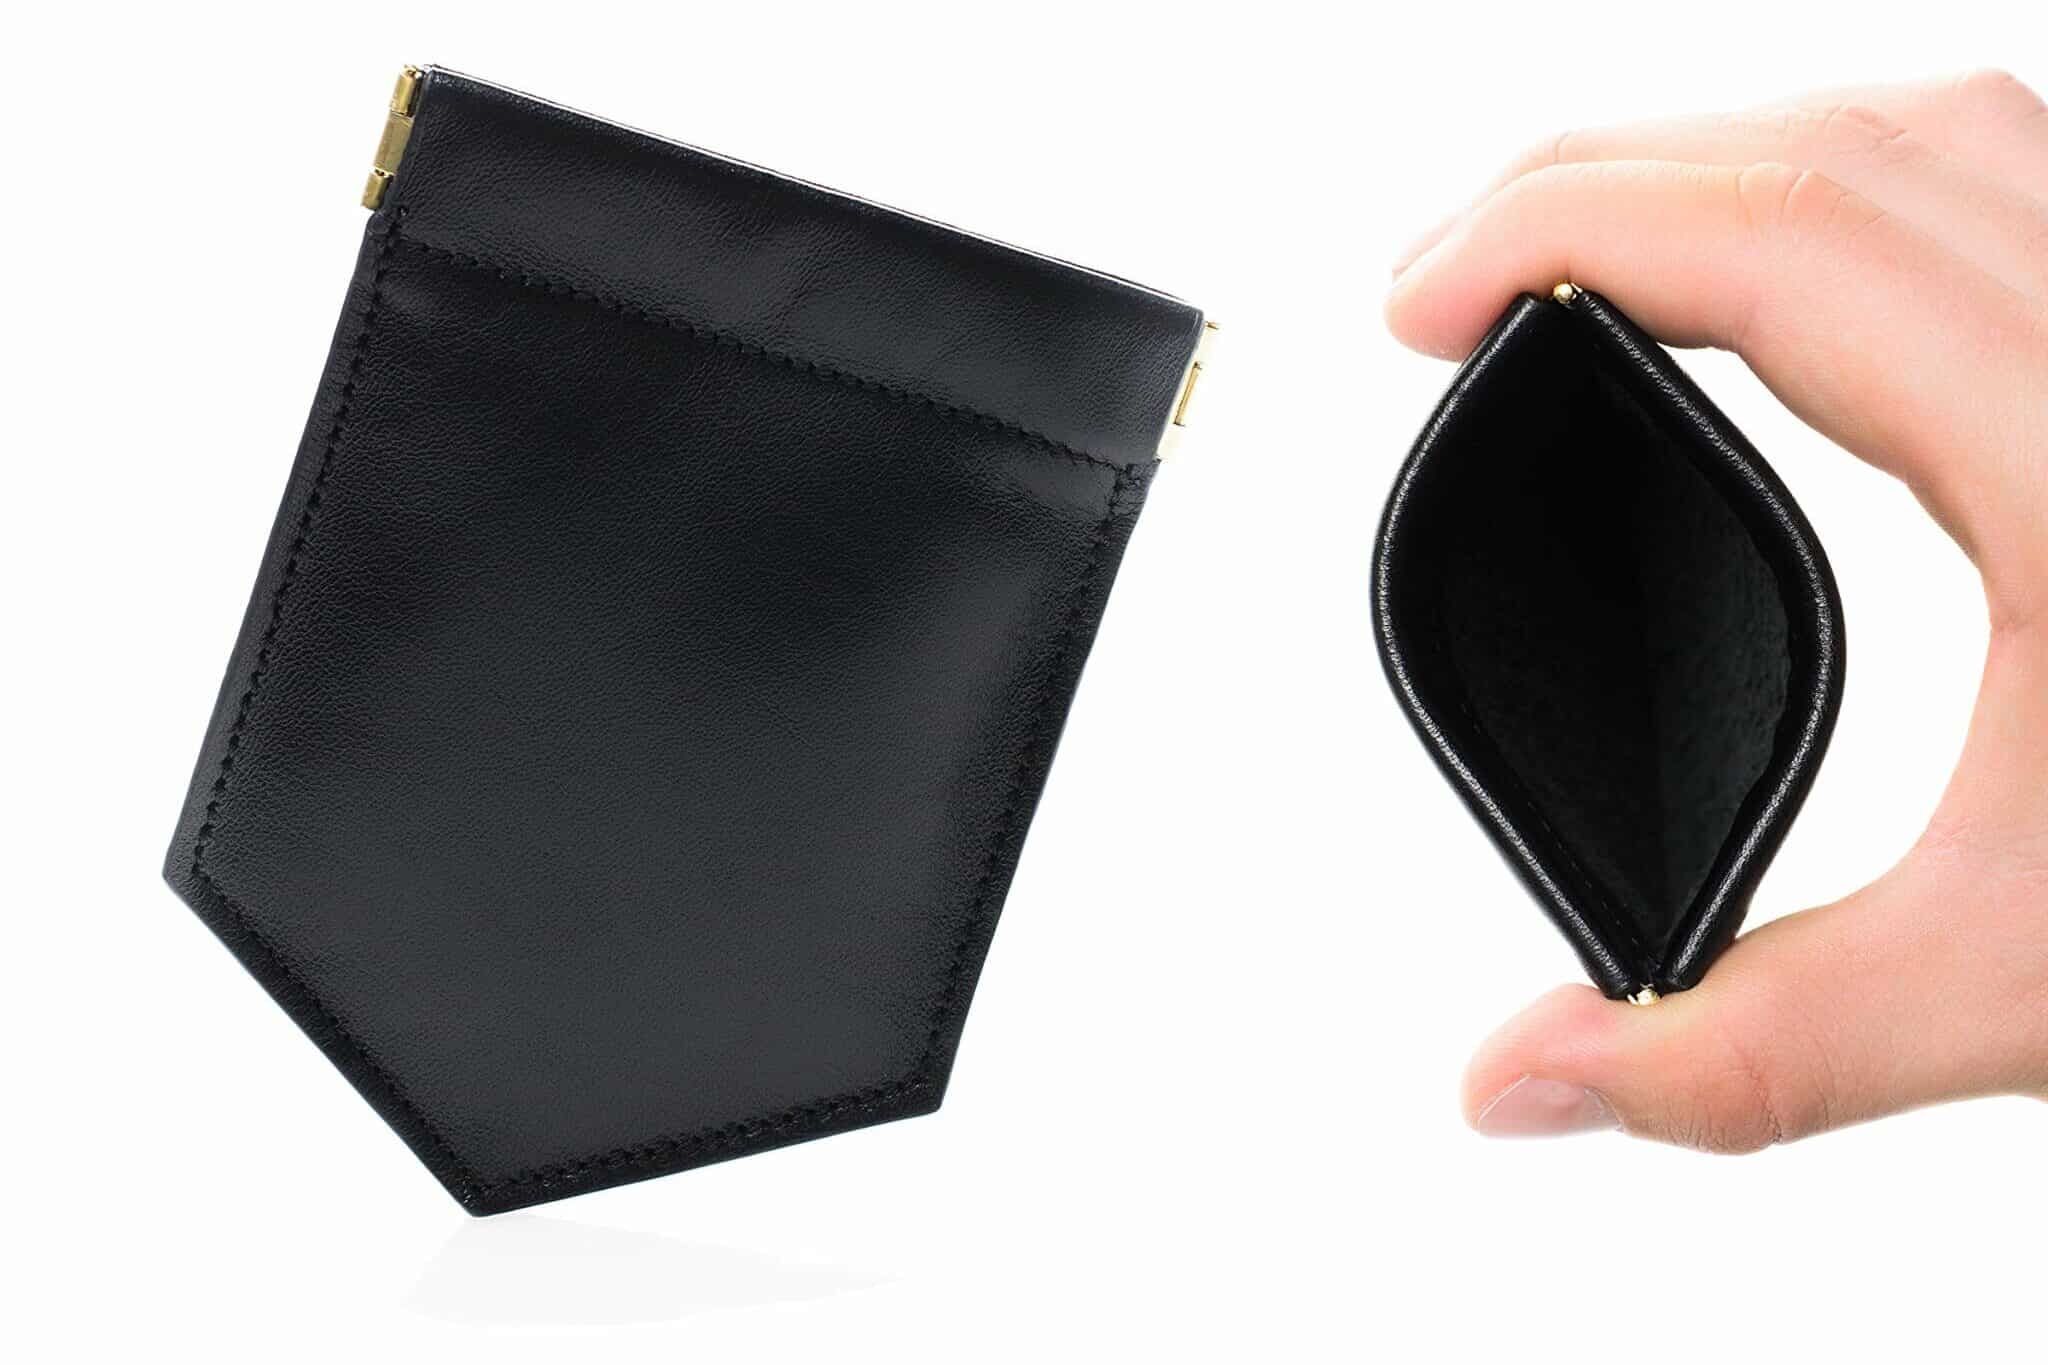 Pocket square holder